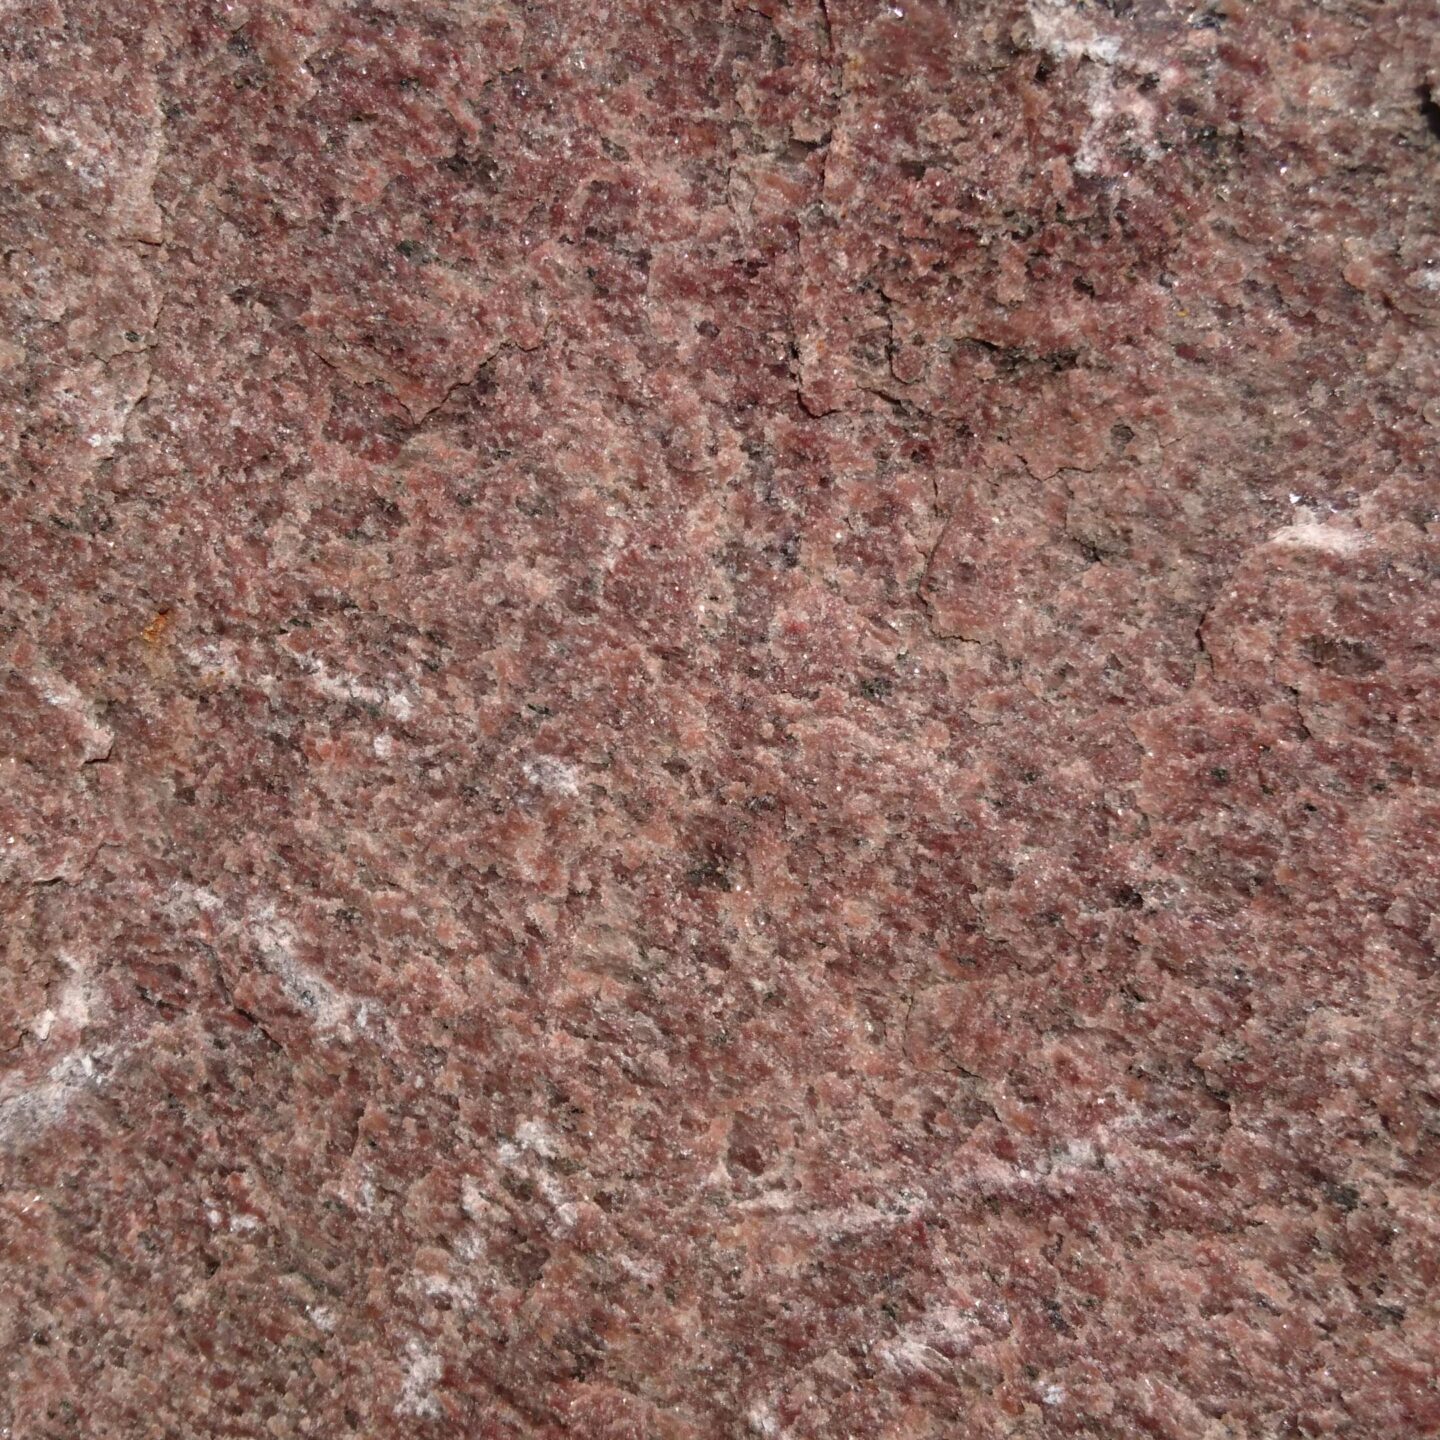 7 Gnejsig granit